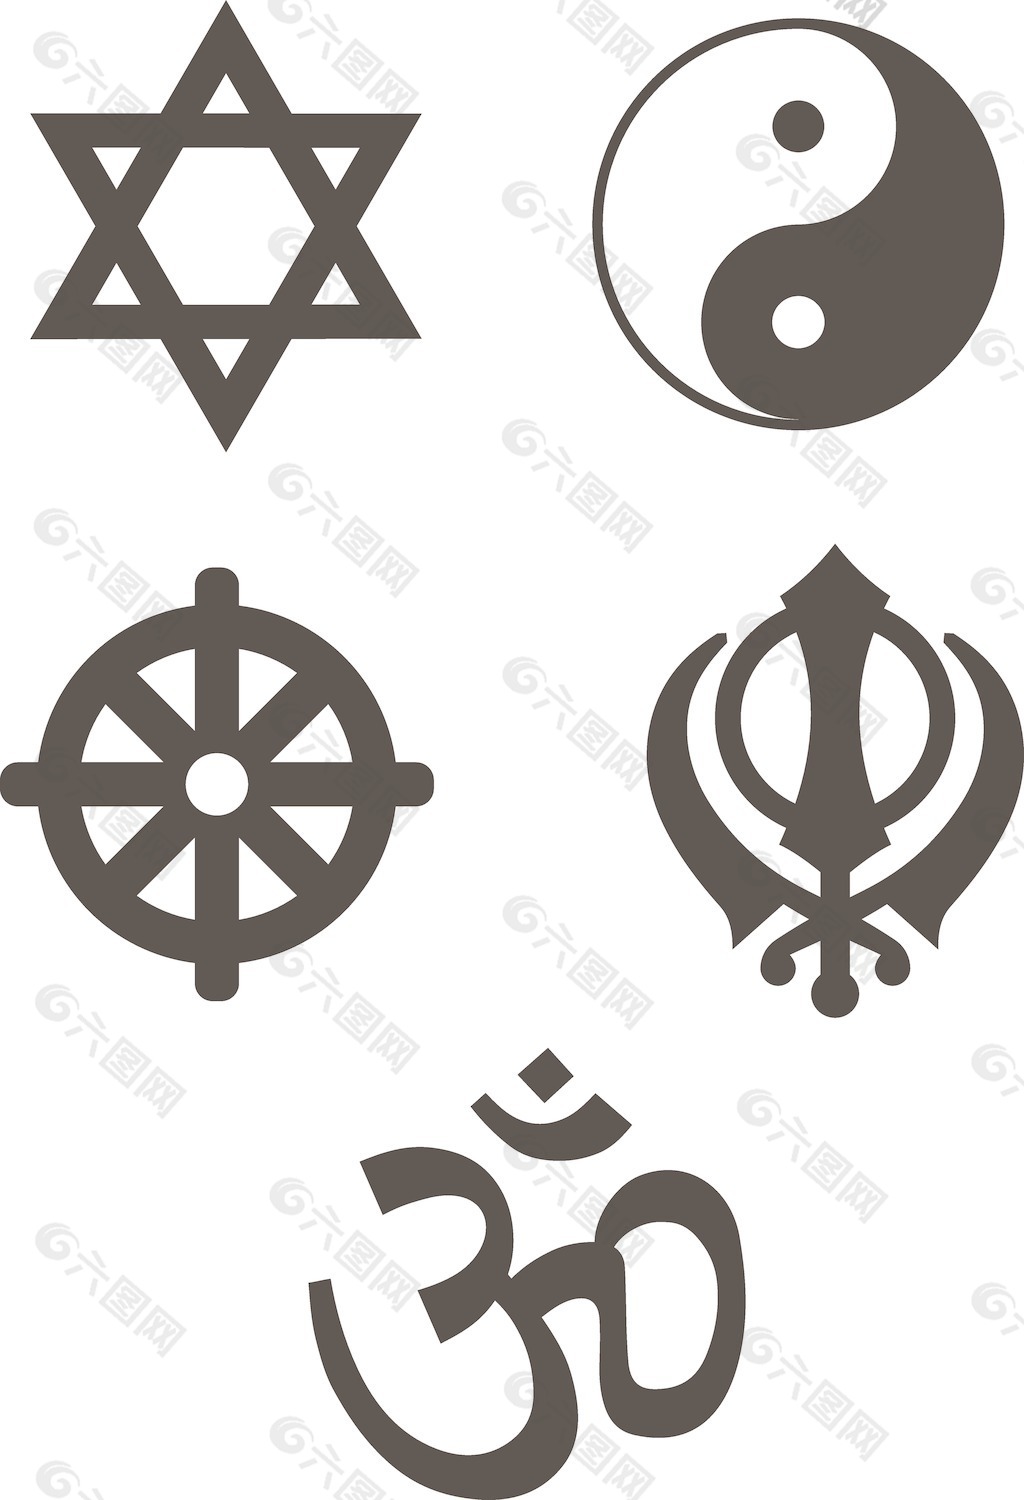 宗教符号矢量ilustration